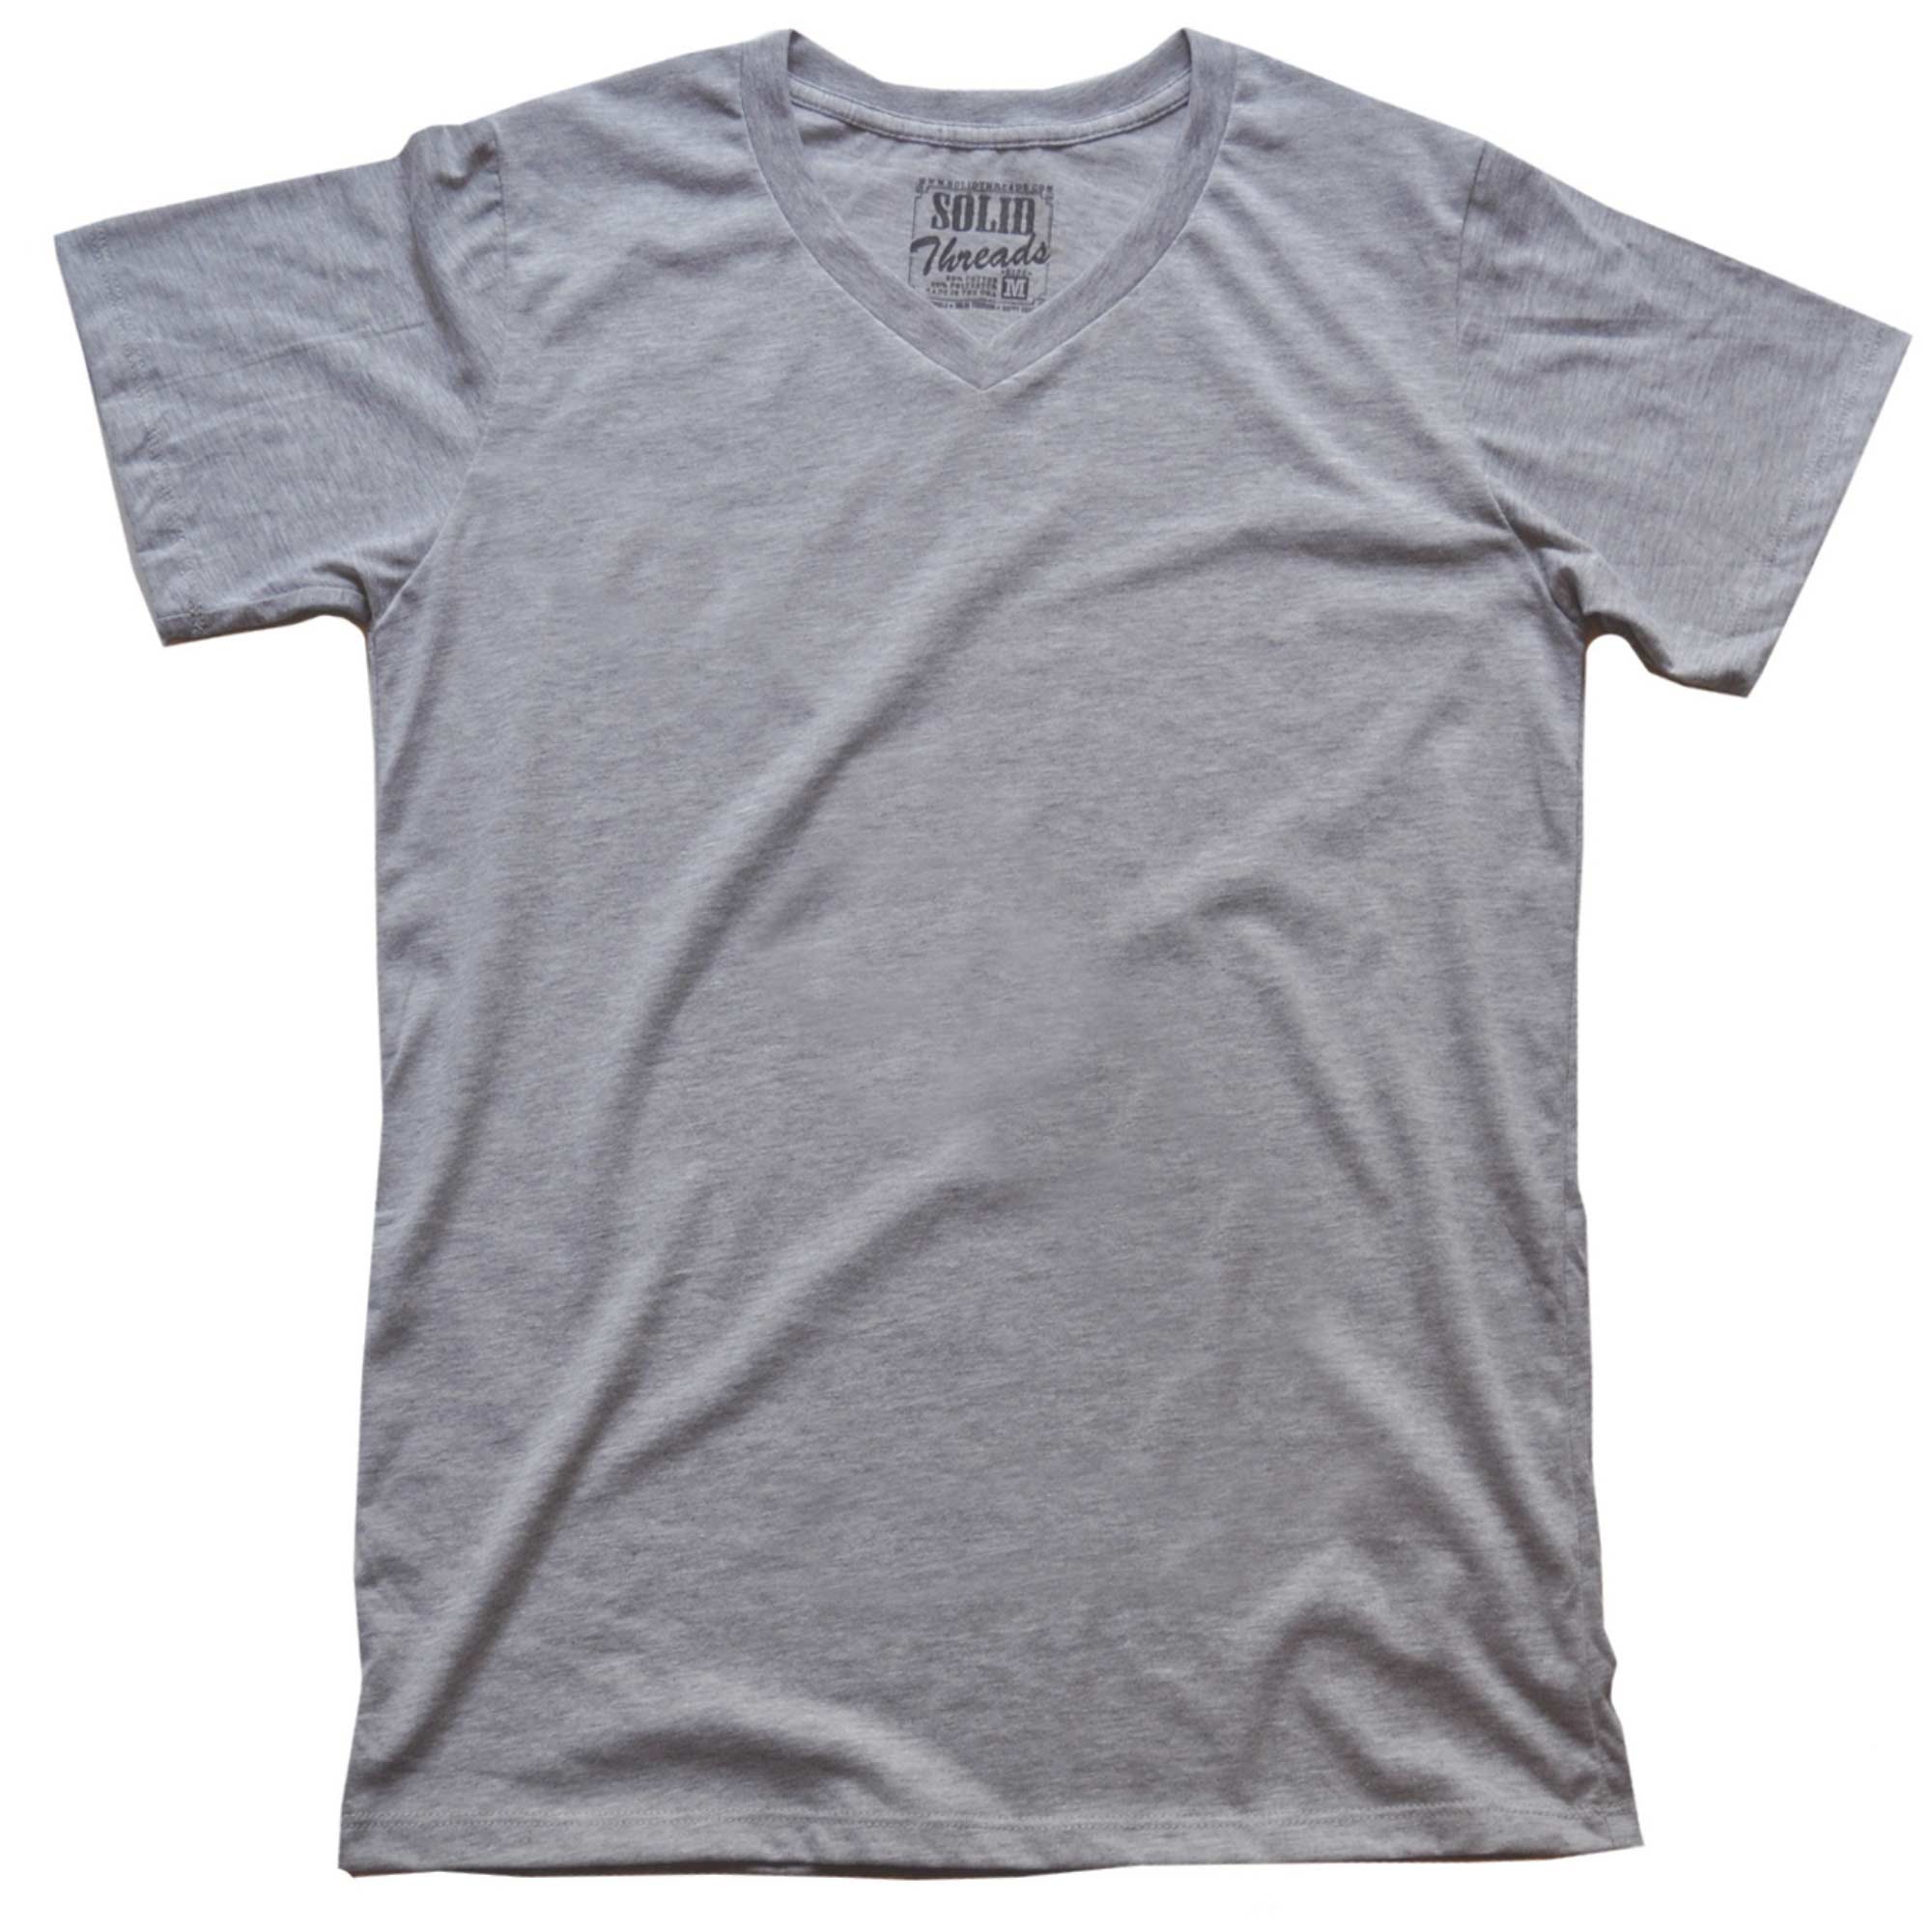 Men's Solid Threads V-Neck T-shirt